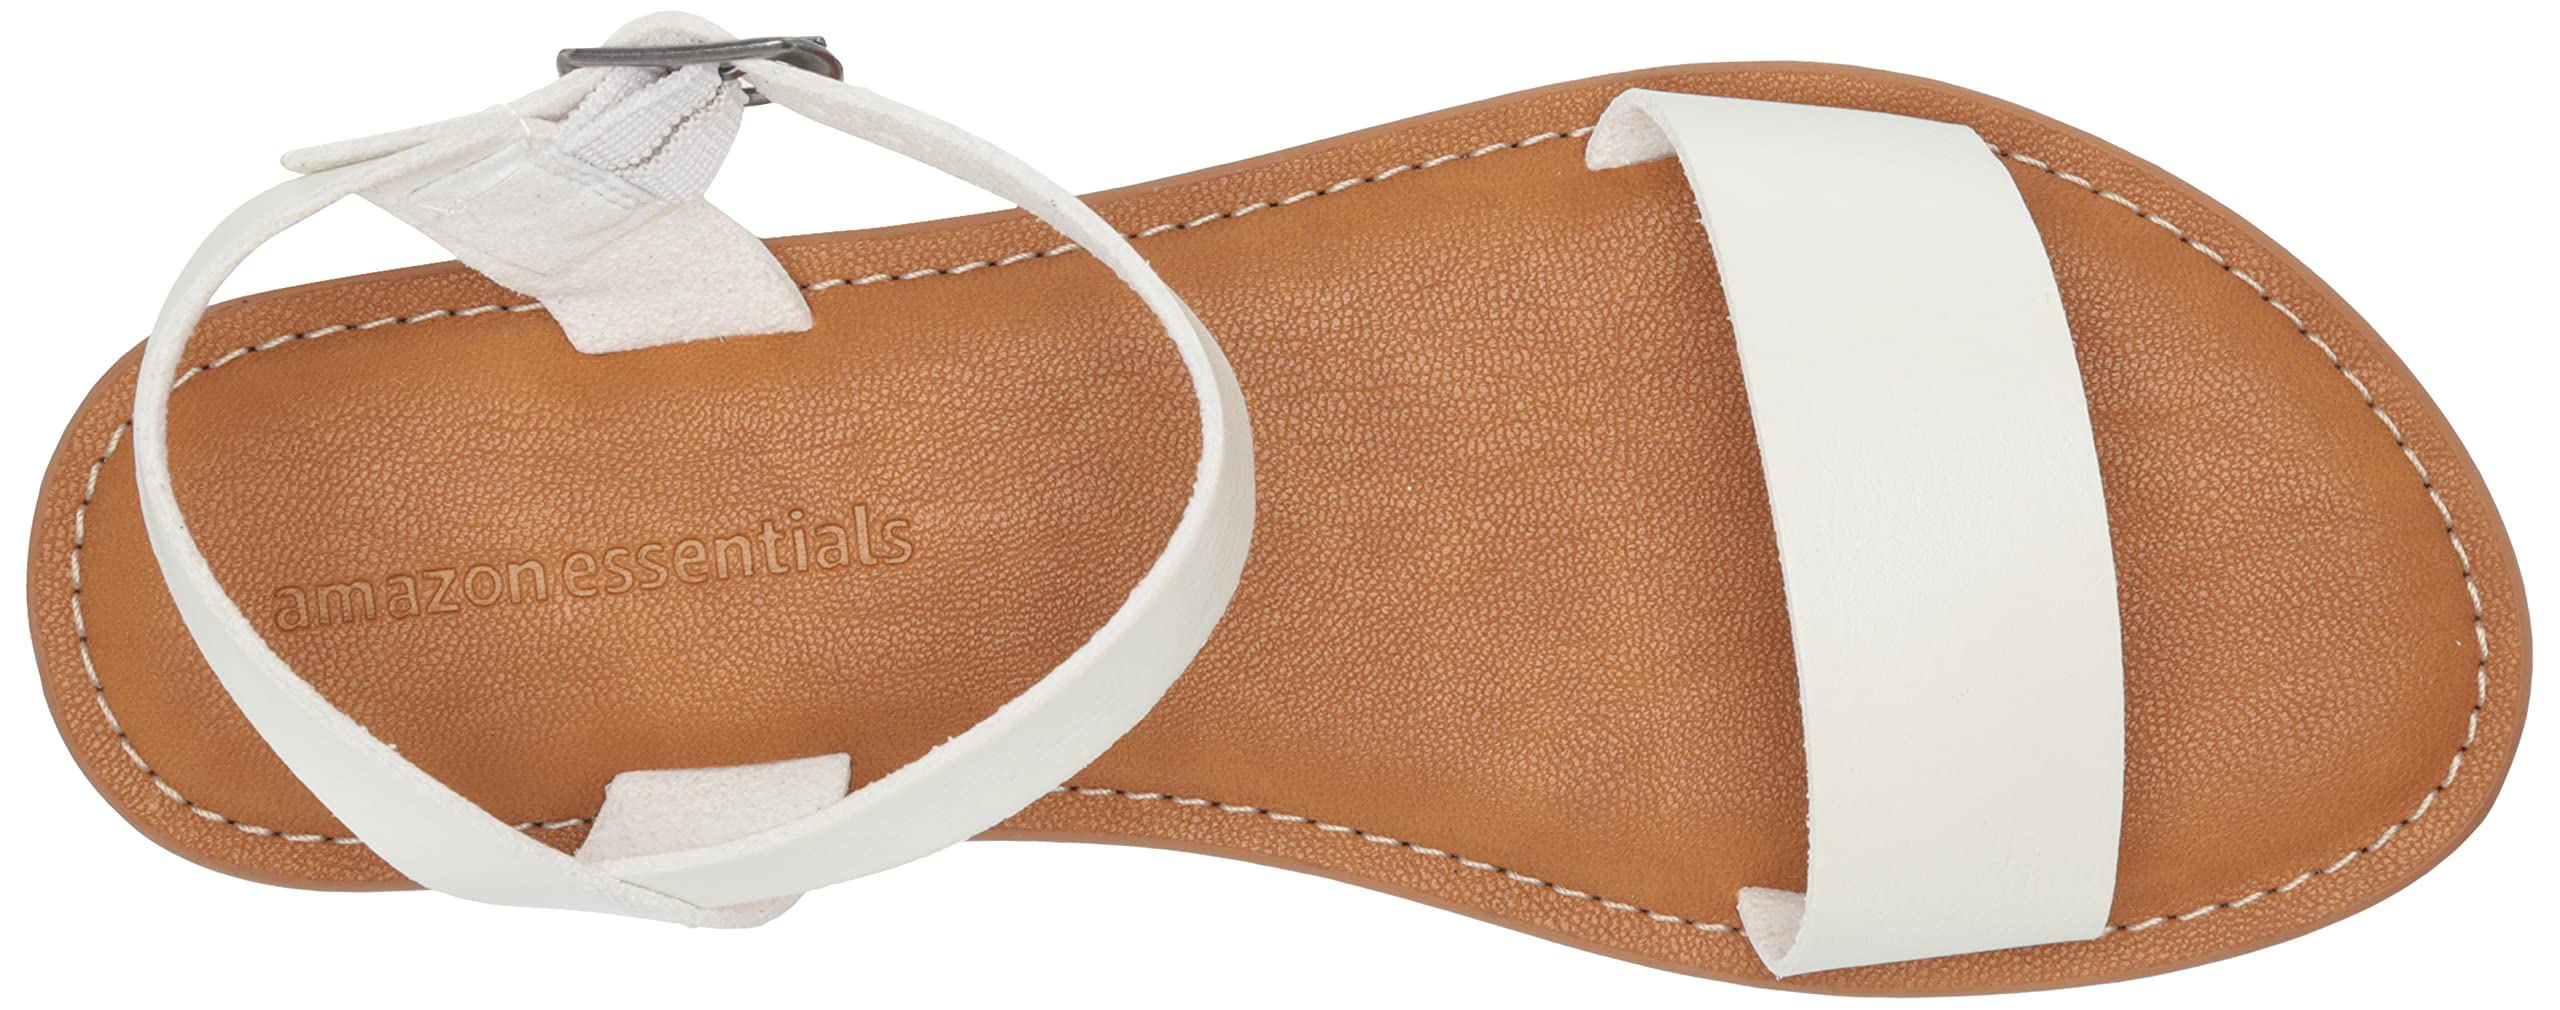 Amazon Essentials Women's Two Strap Buckle Sandal